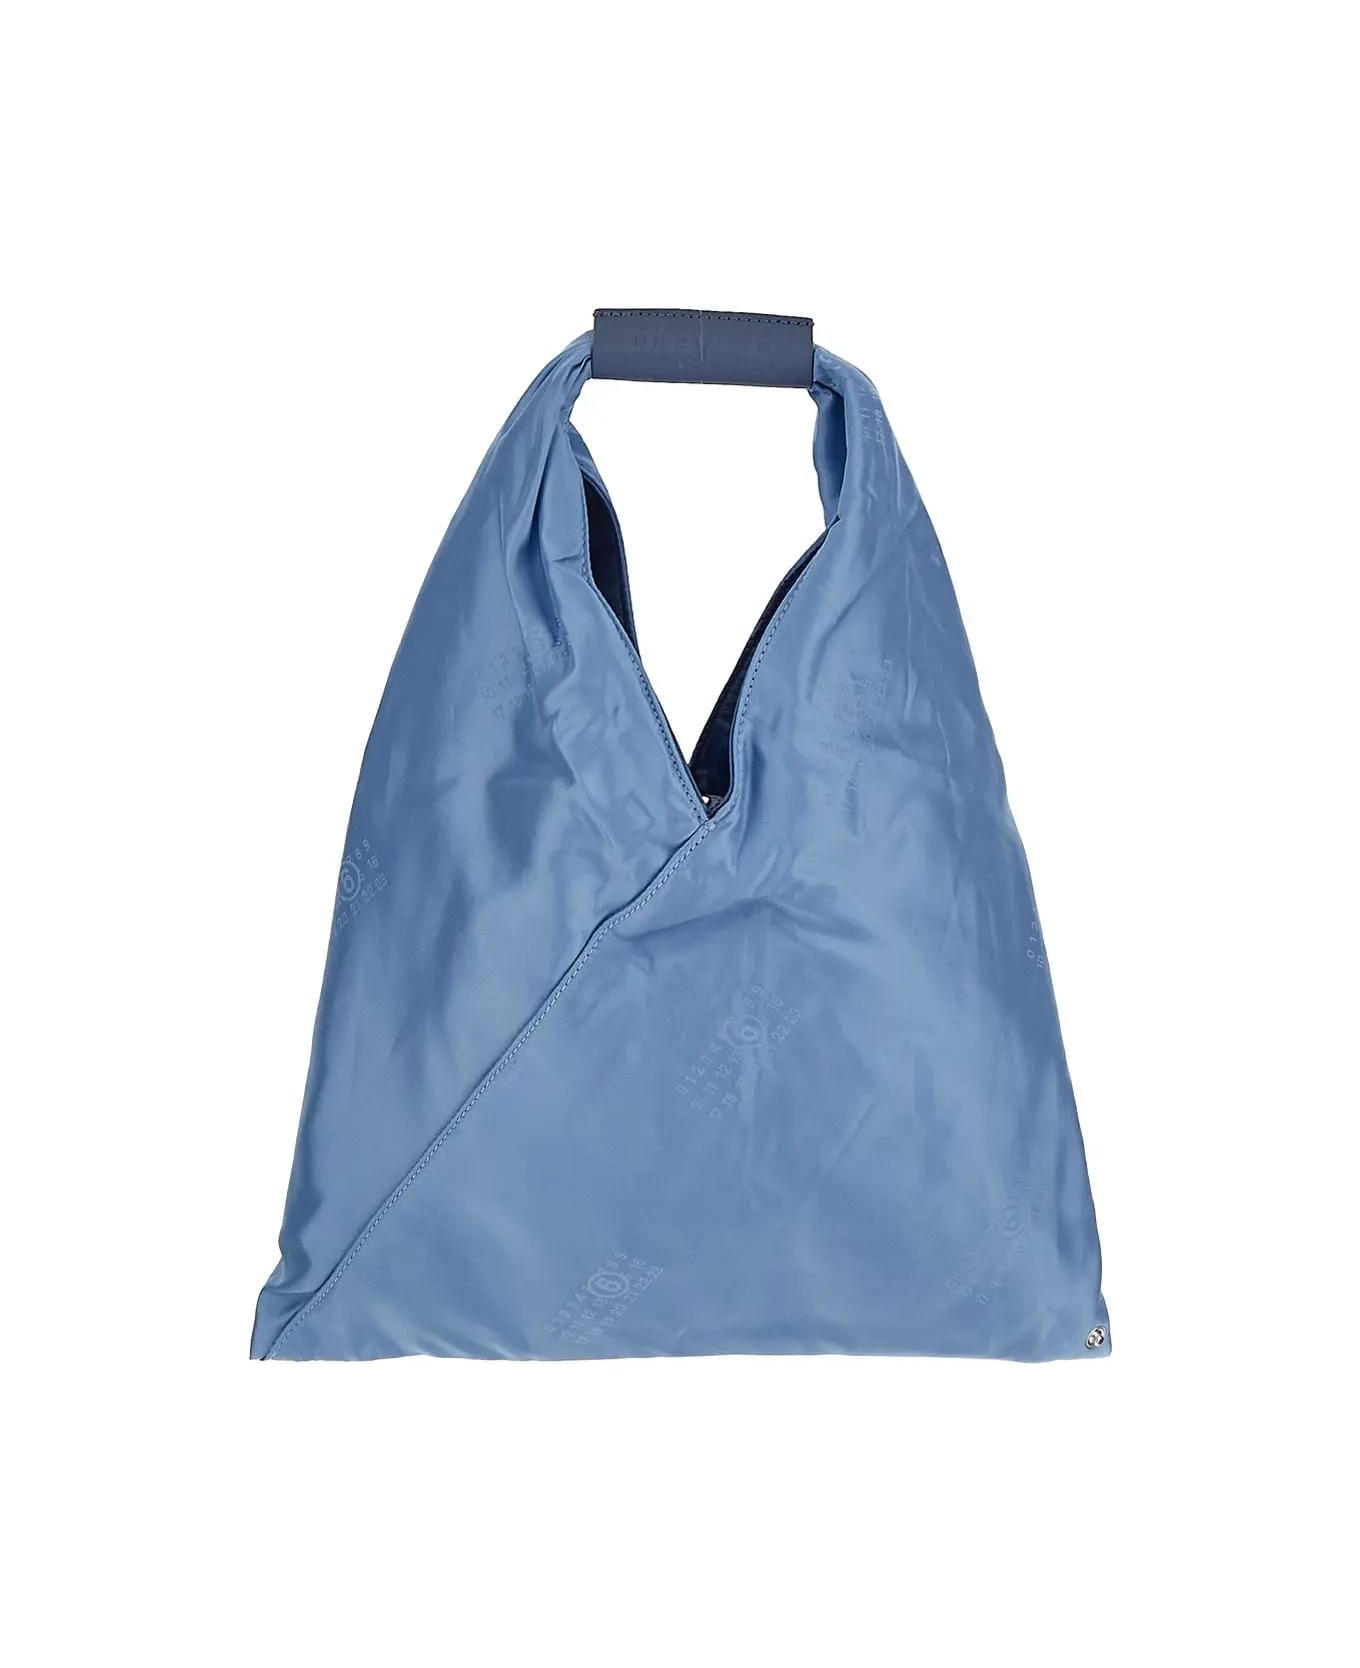 MM6 Maison Margiela Japanese Tote Bag - Blue トートバッグ